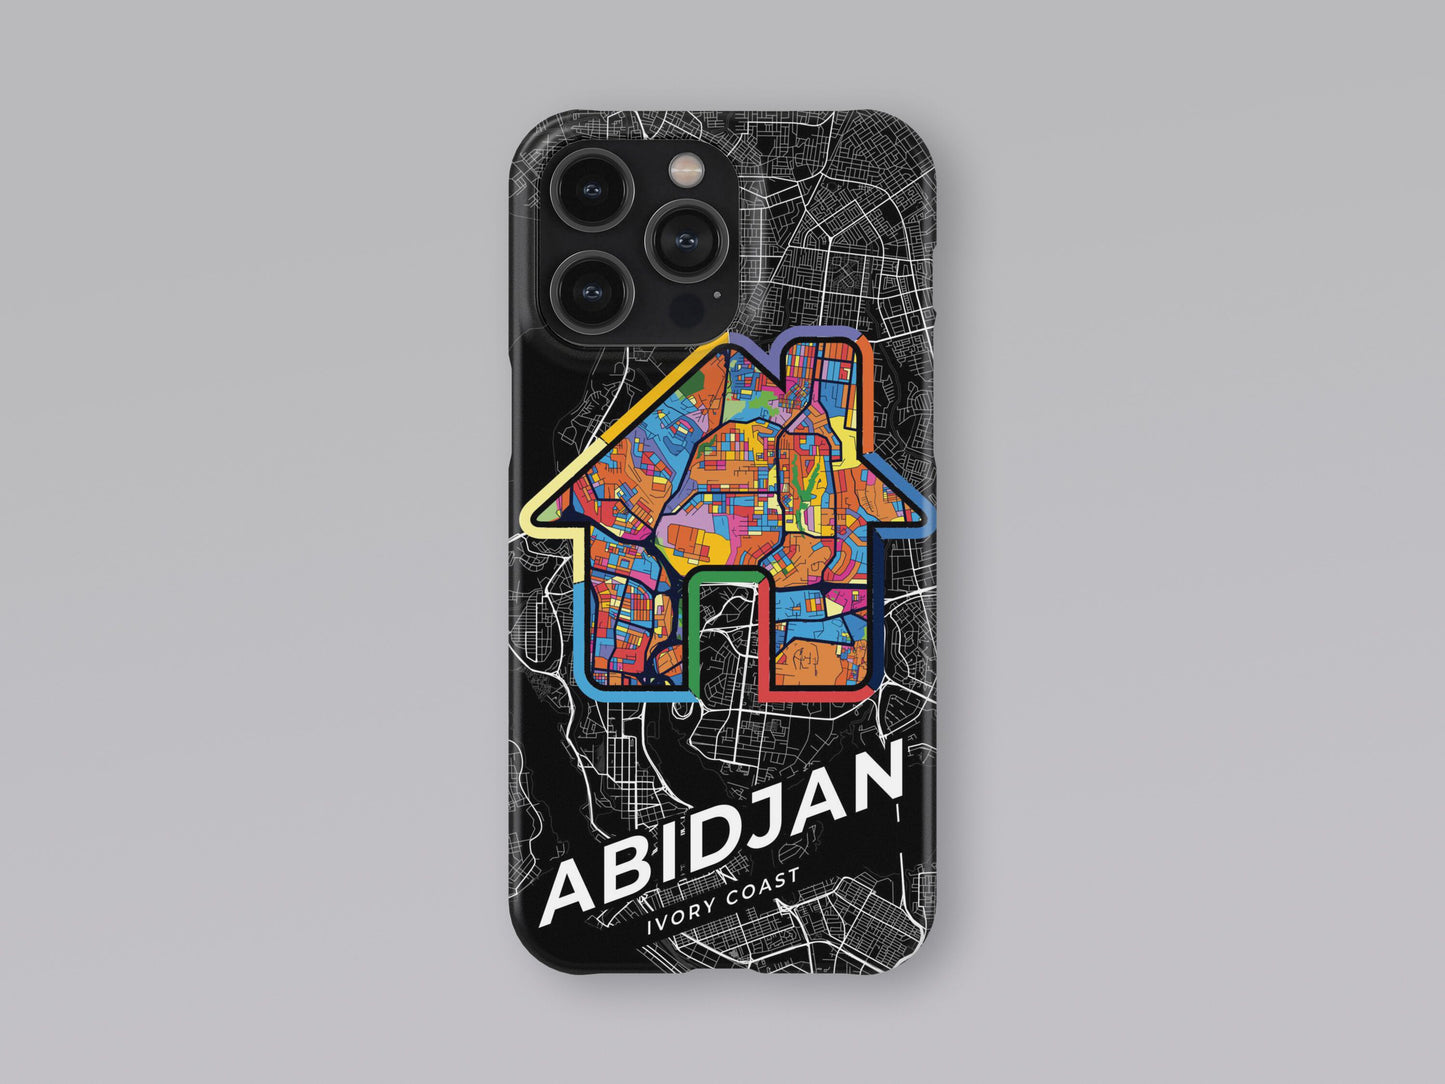 Abidjan Ivory Coast slim phone case with colorful icon. Birthday, wedding or housewarming gift. Couple match cases. 3